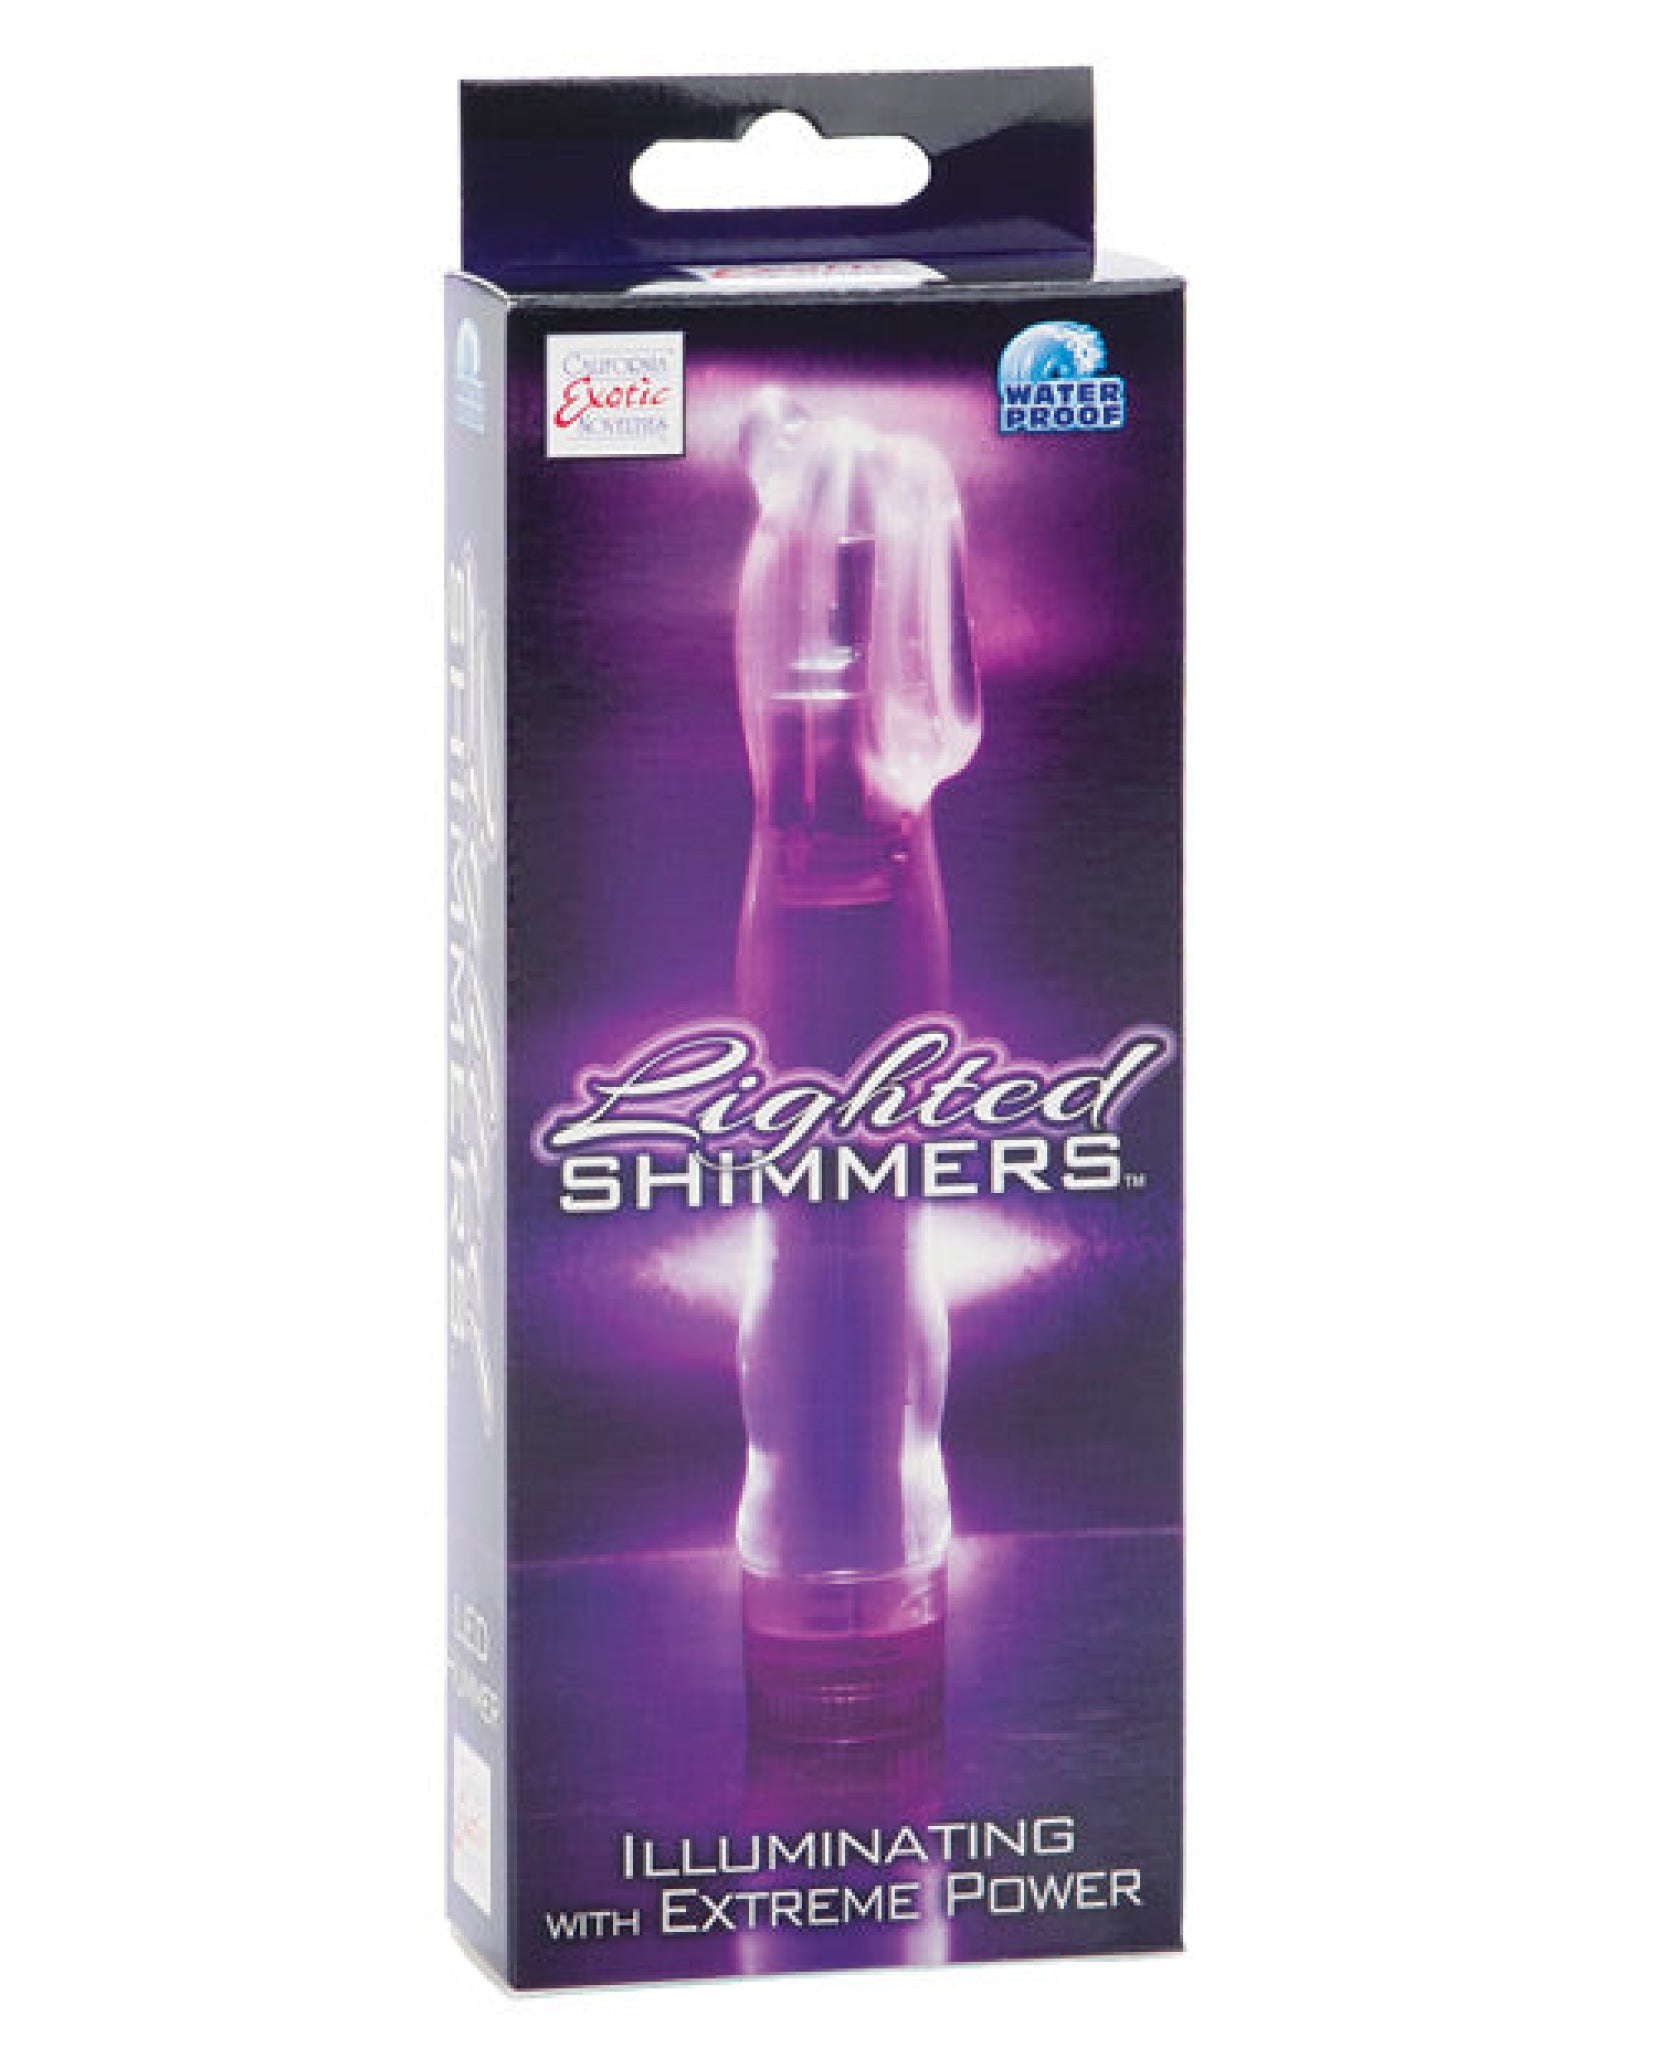 Lighted Shimmers Led Hummer California Exotic Novelties